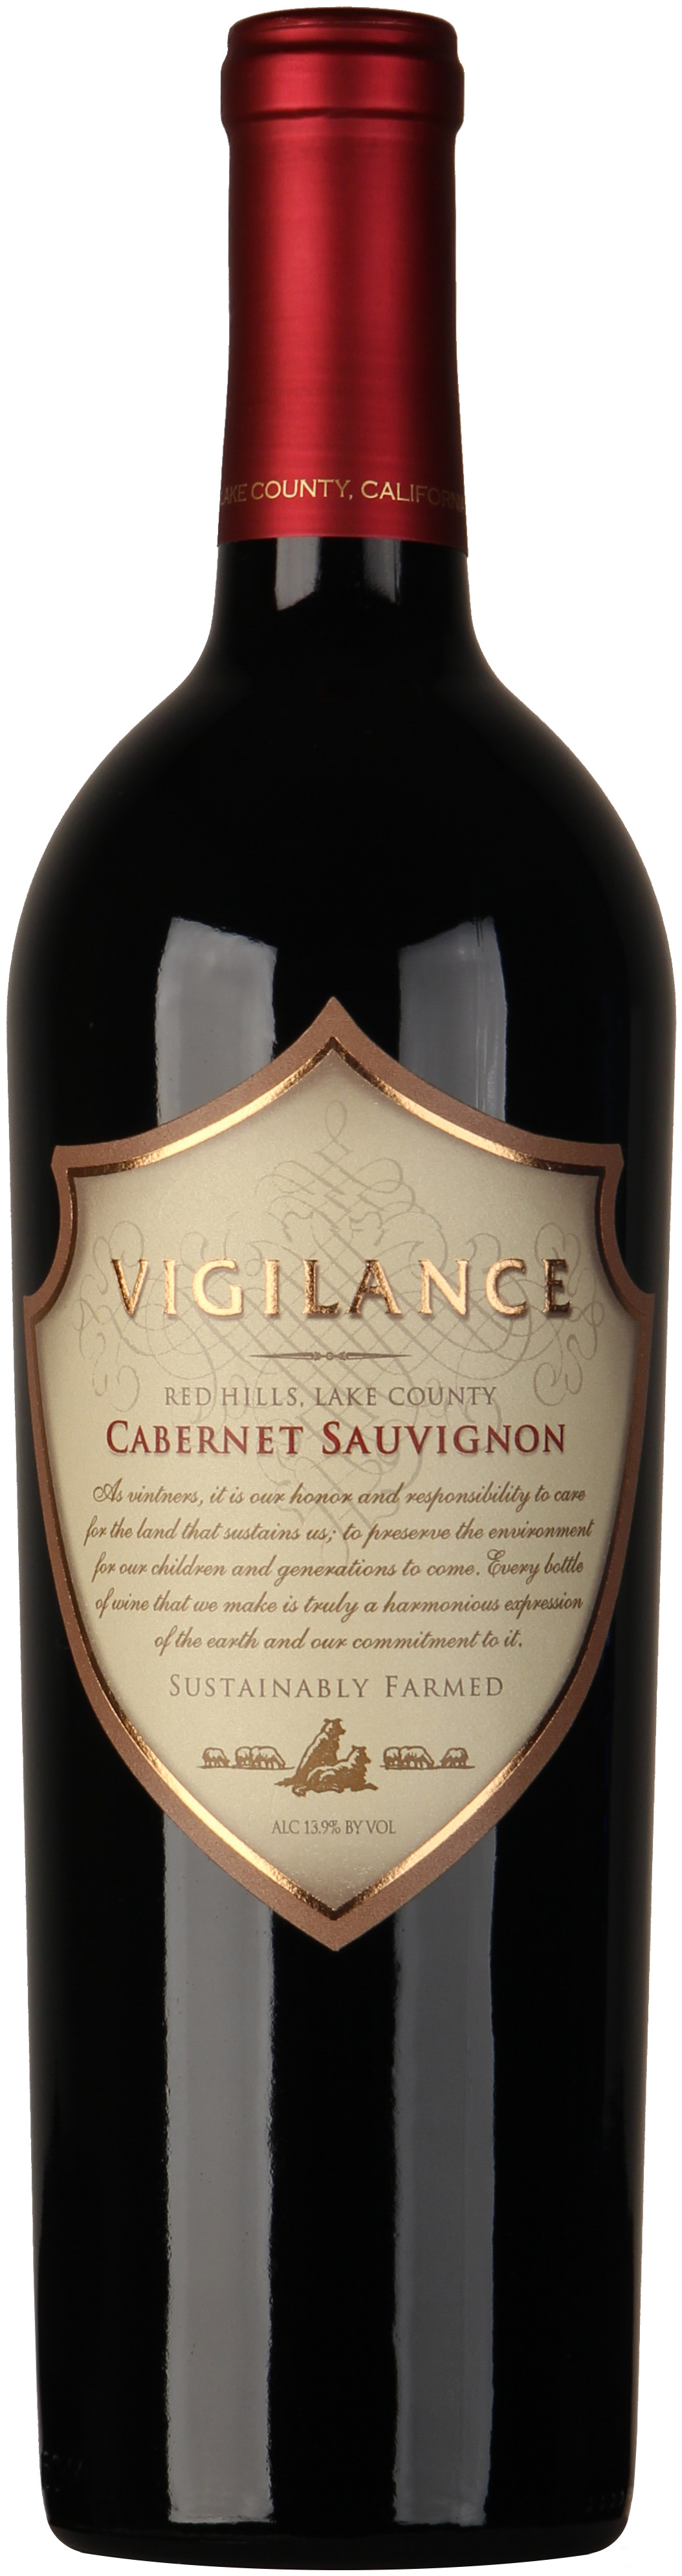 images/wine/Red Wine/Vigilance Cabernet Sauvignon .jpg